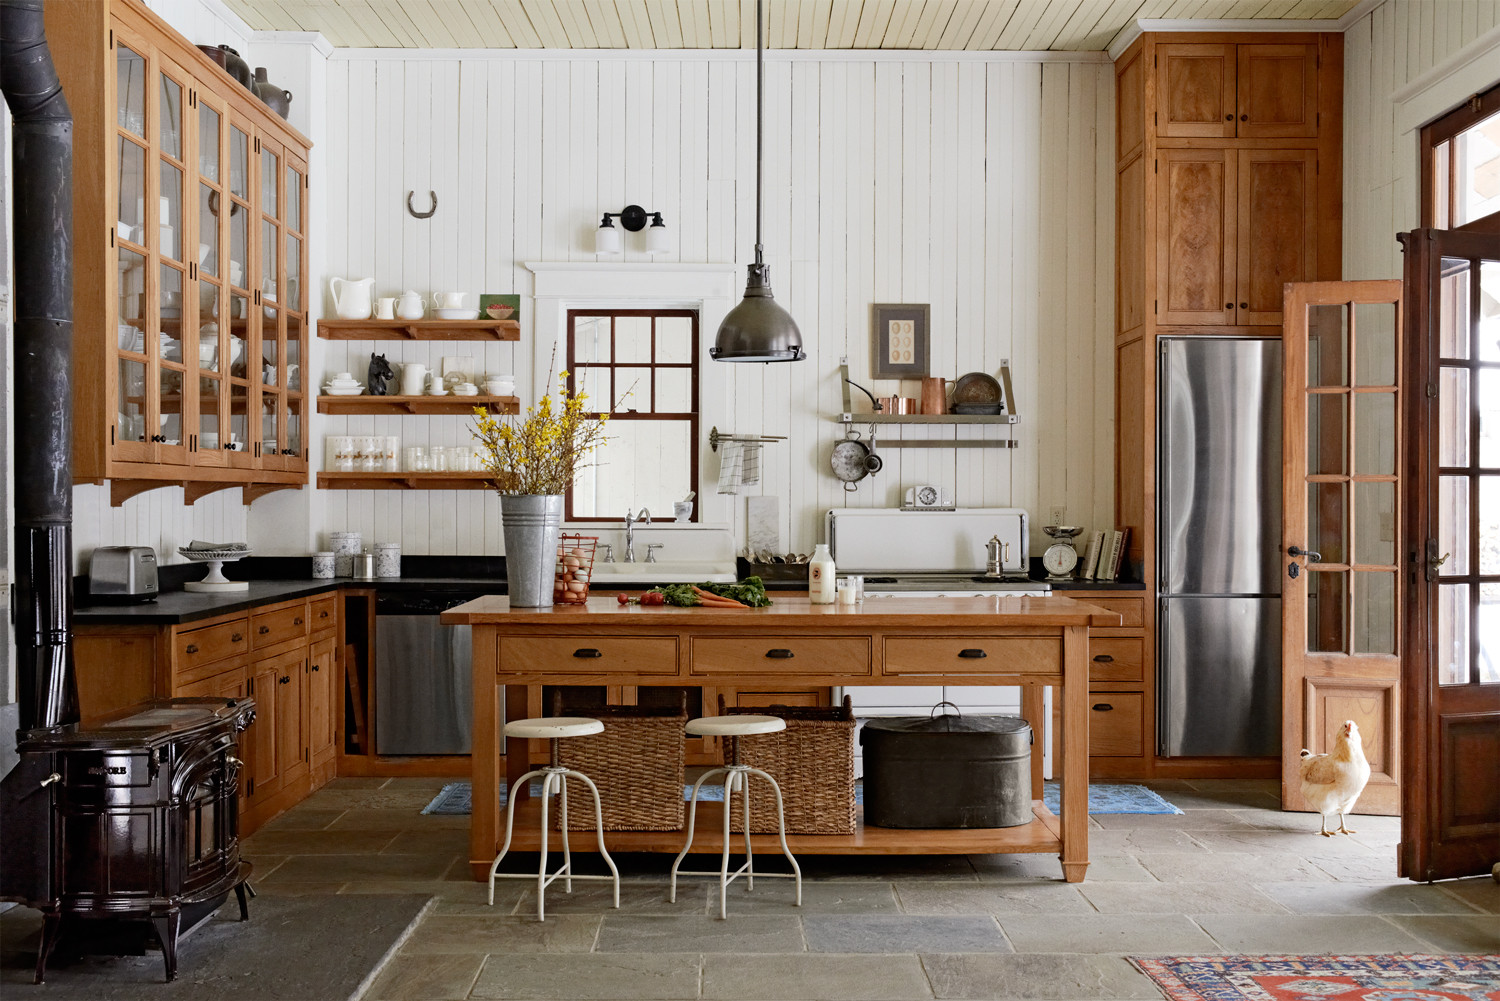 Country Kitchen Design Ideas
 8 Ways to Add Authentic Farmhouse Style to Your Kitchen